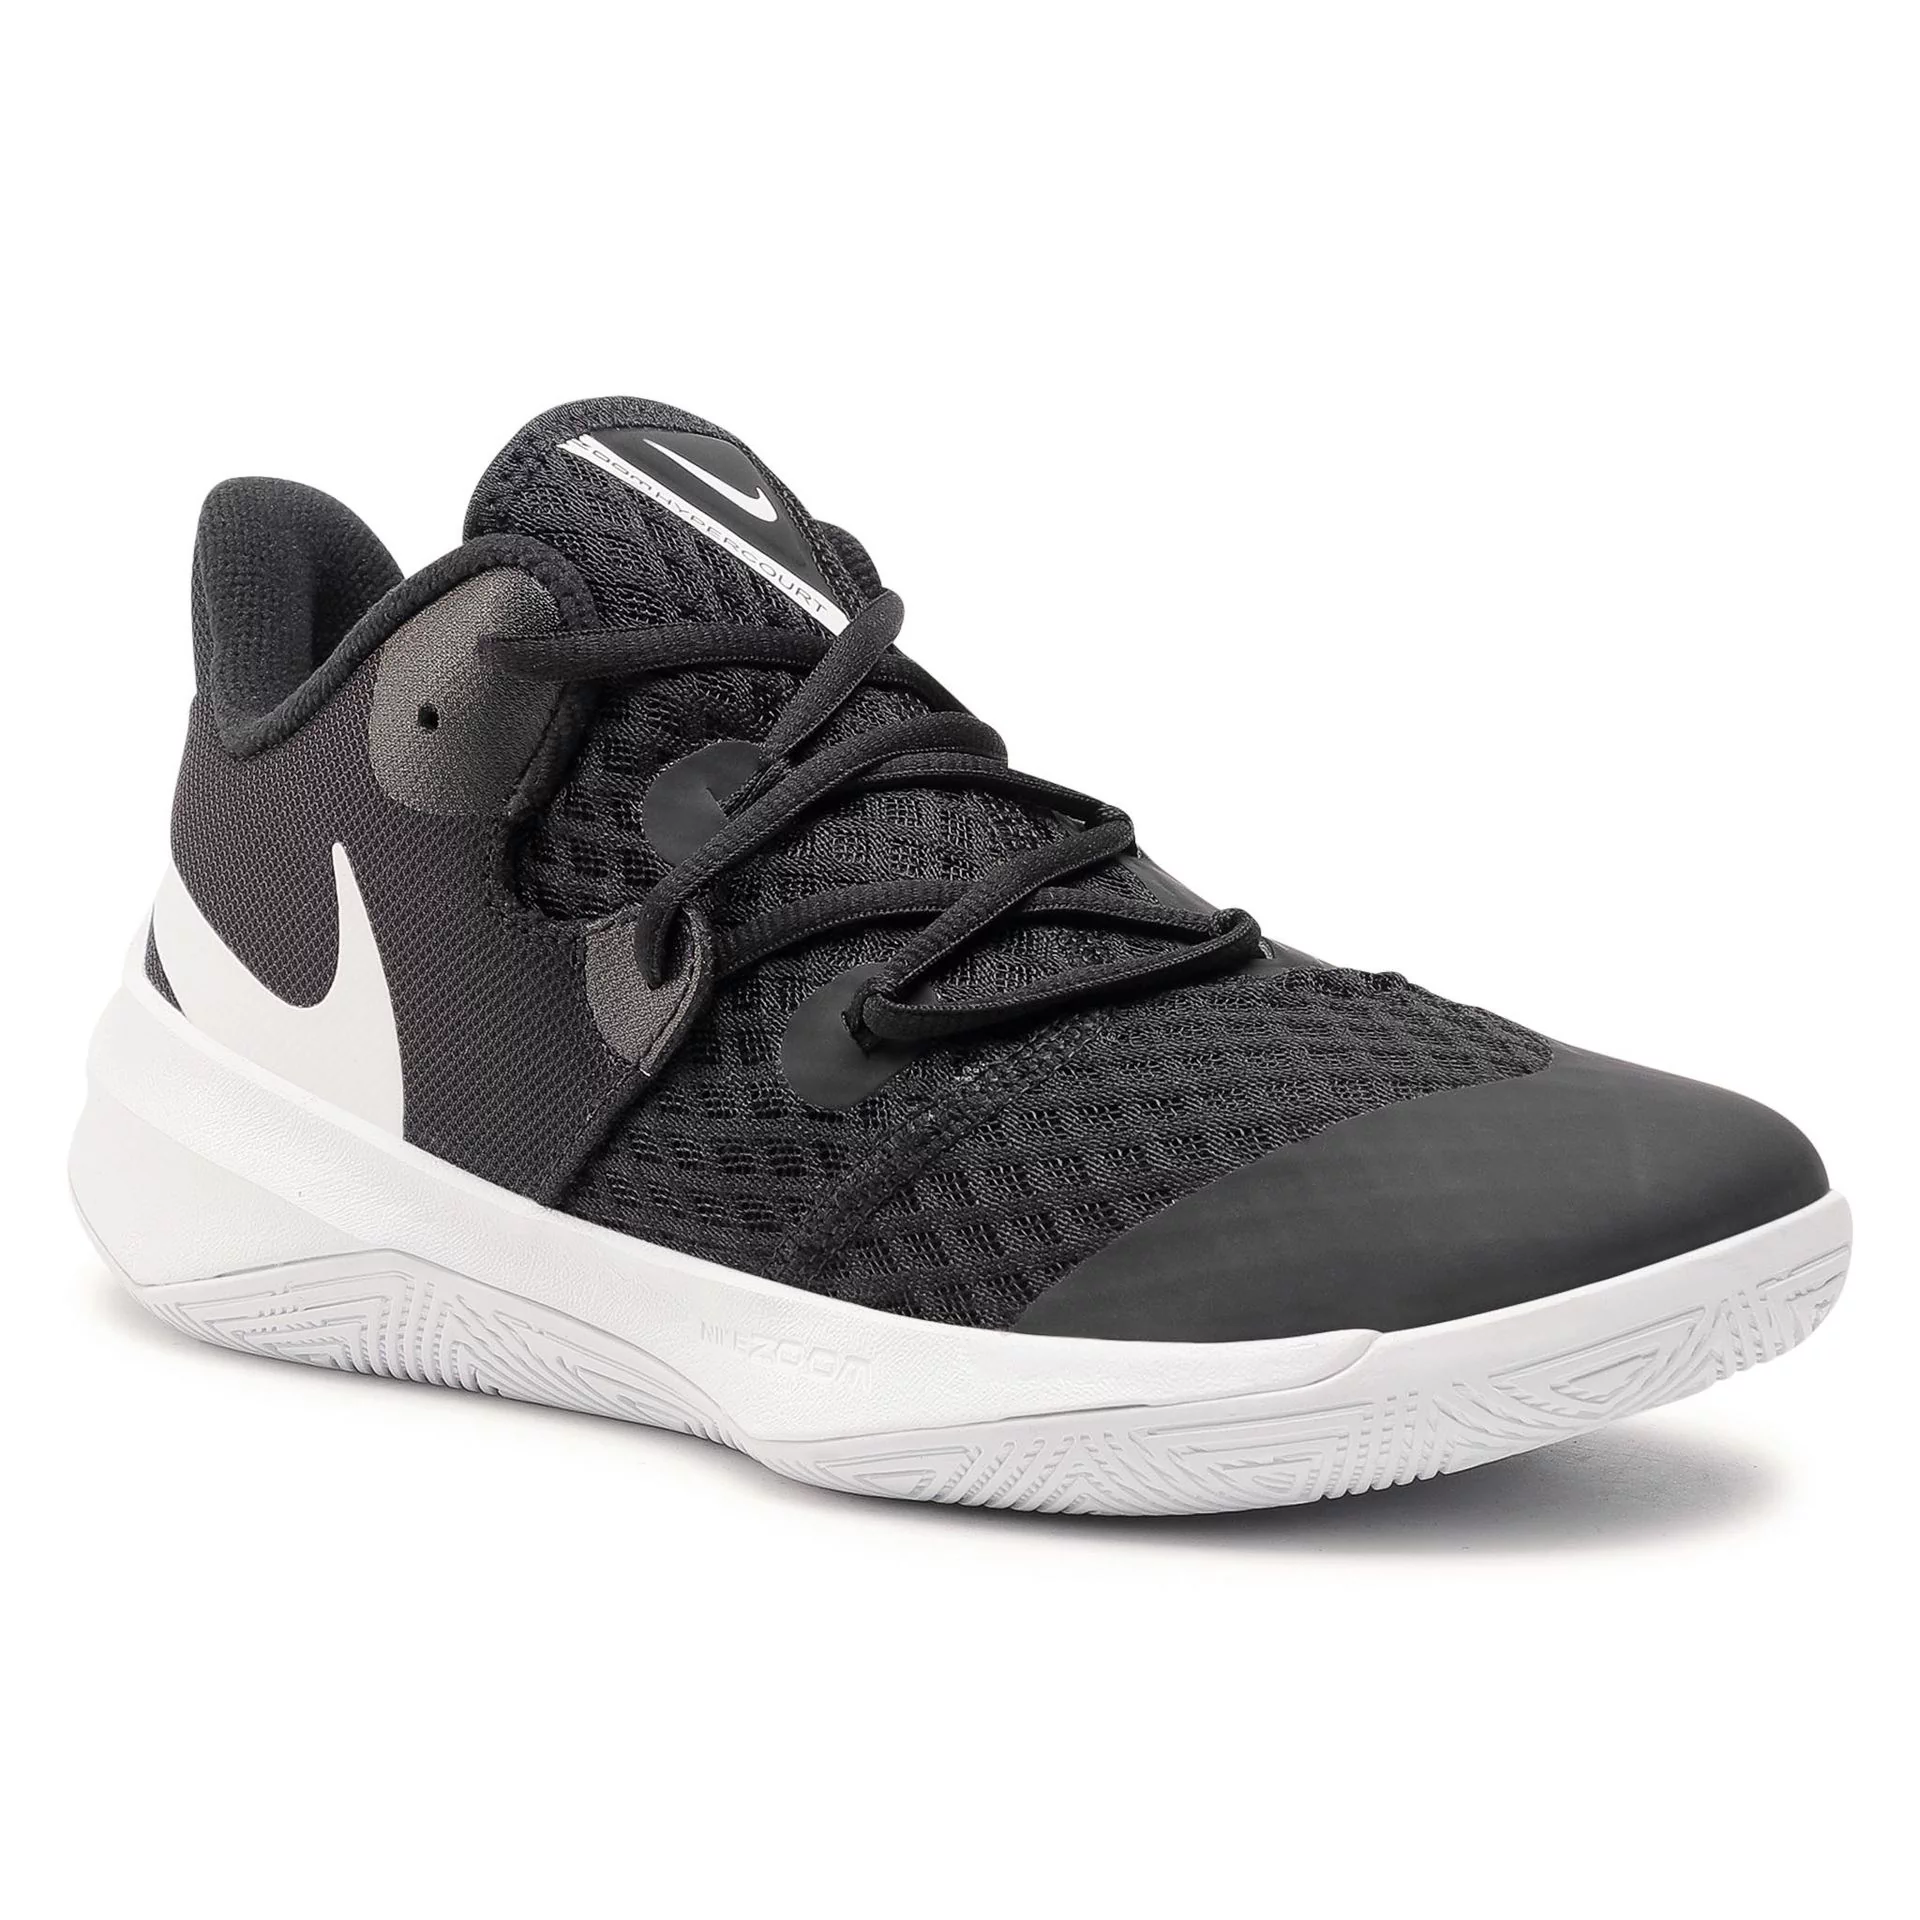 Nike Buty Zoom Hyperspeed Court CI2964 010 Black/White